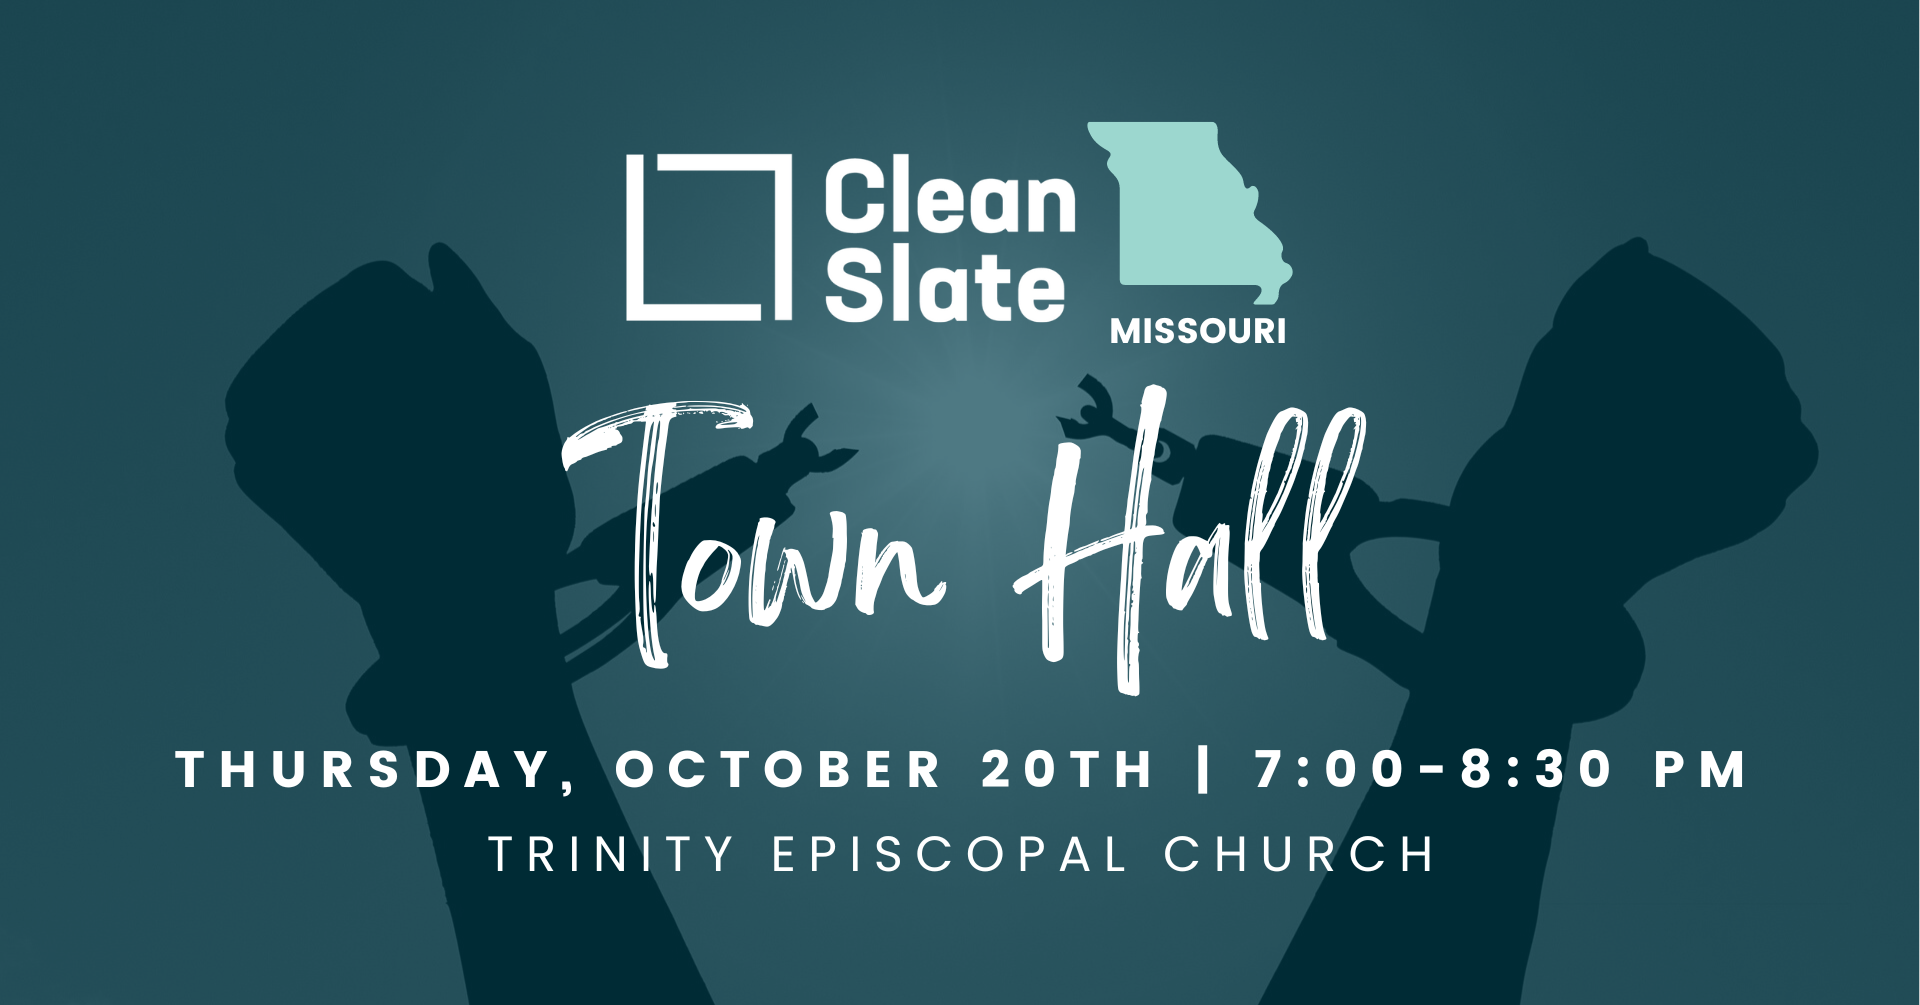 Clean Slate Town Hall - Springfield, MO - Empower Missouri